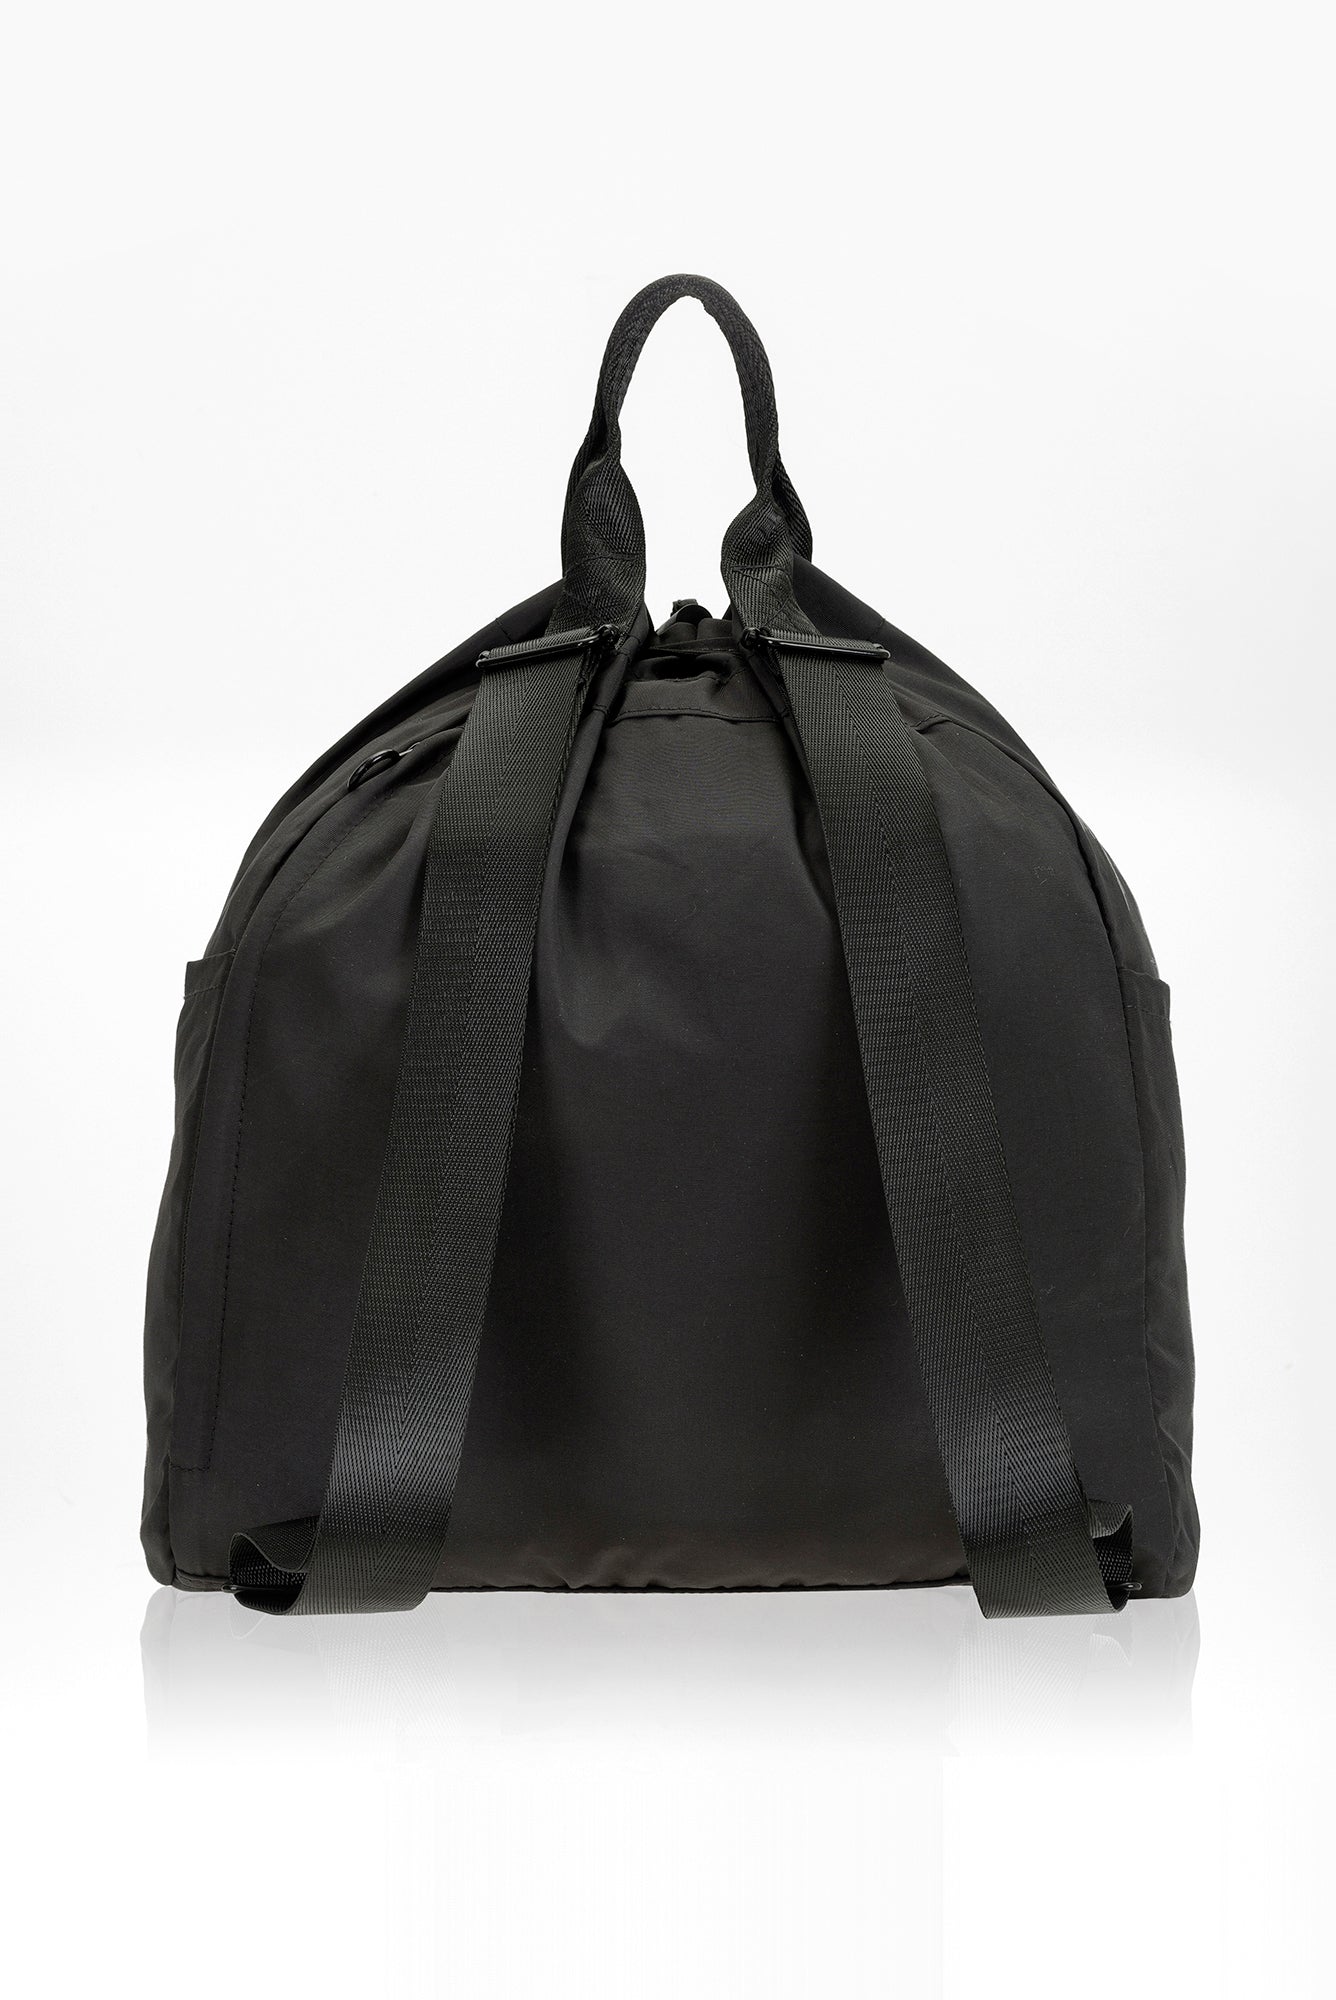 Accessories :: Bags – Limbers Dancewear